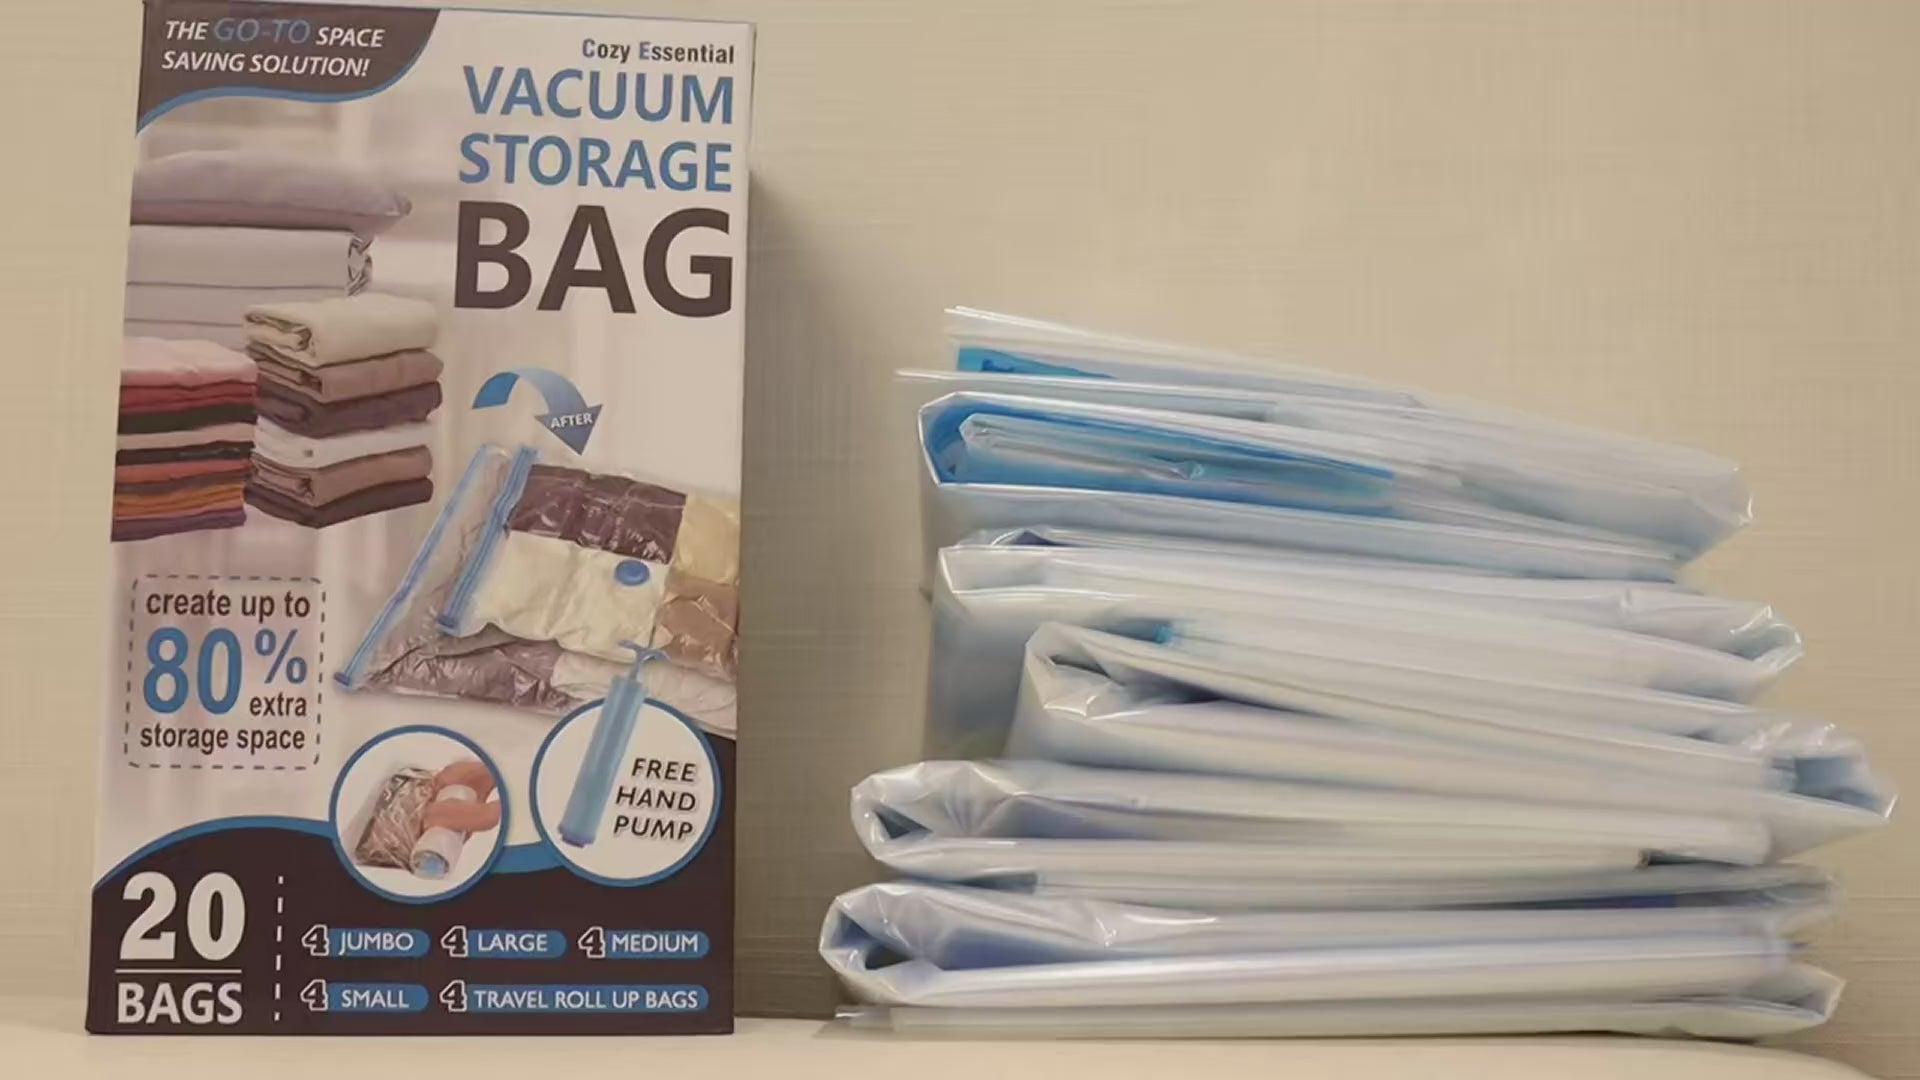 Vacuum Storage Bags, Hand Pump Included, 20 Pack